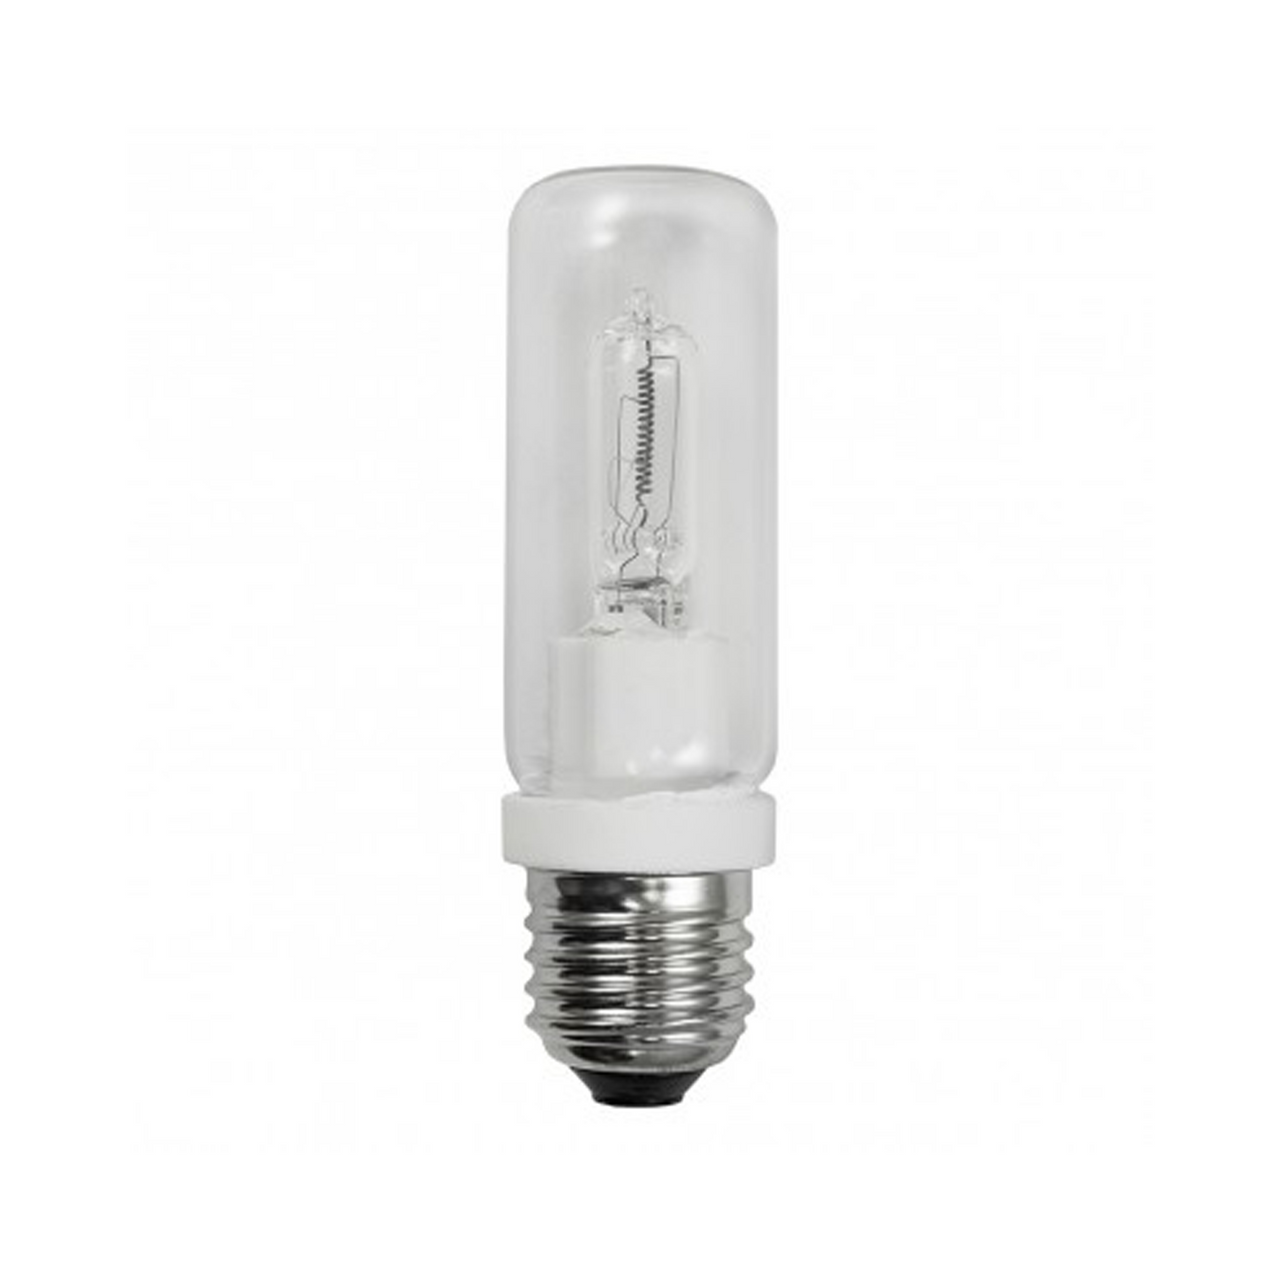 Shop Halogen Spotlight Bulb 150w online